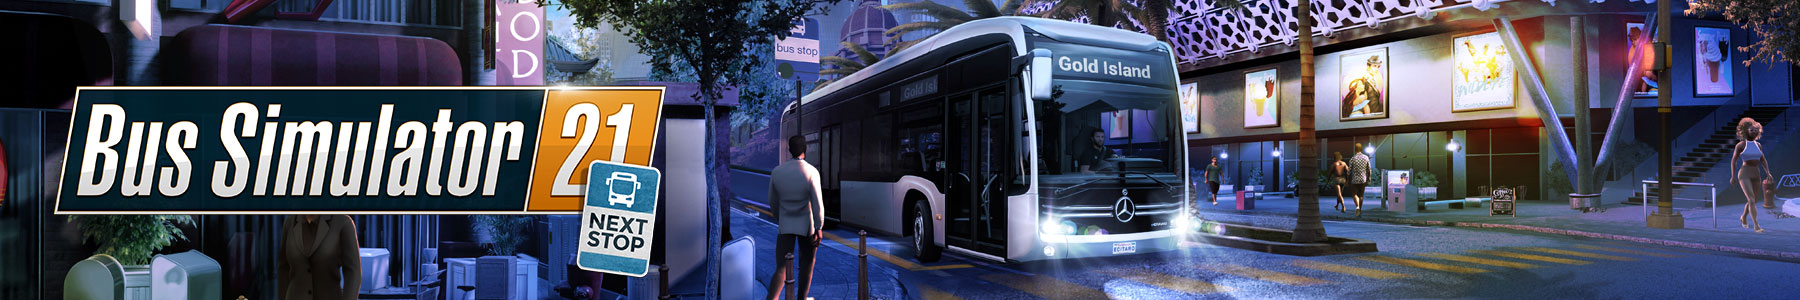 Proton Bus Simulator #4 - Fun Ride! - Bus Game Android gameplay 